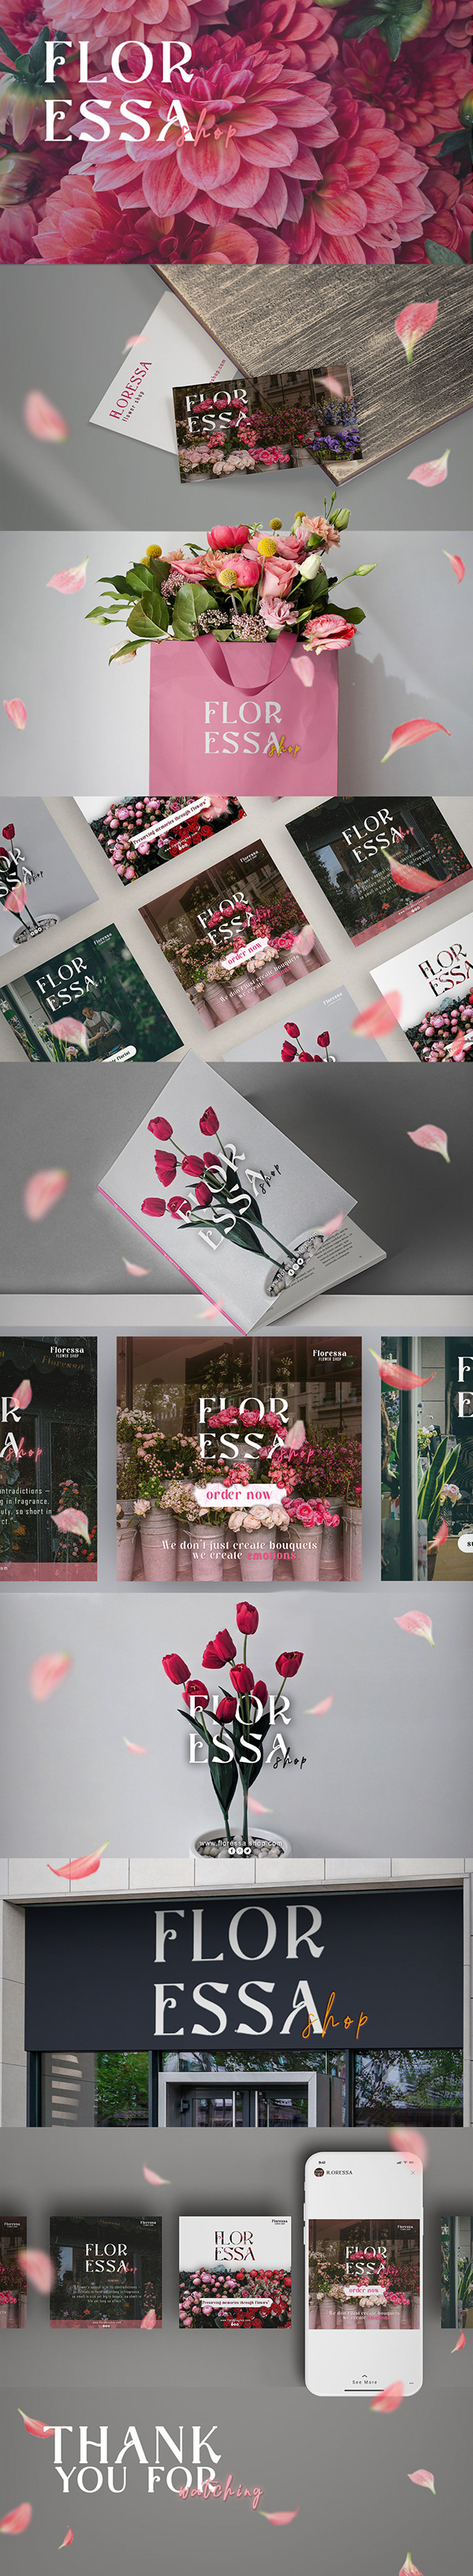 Flower shop social media design